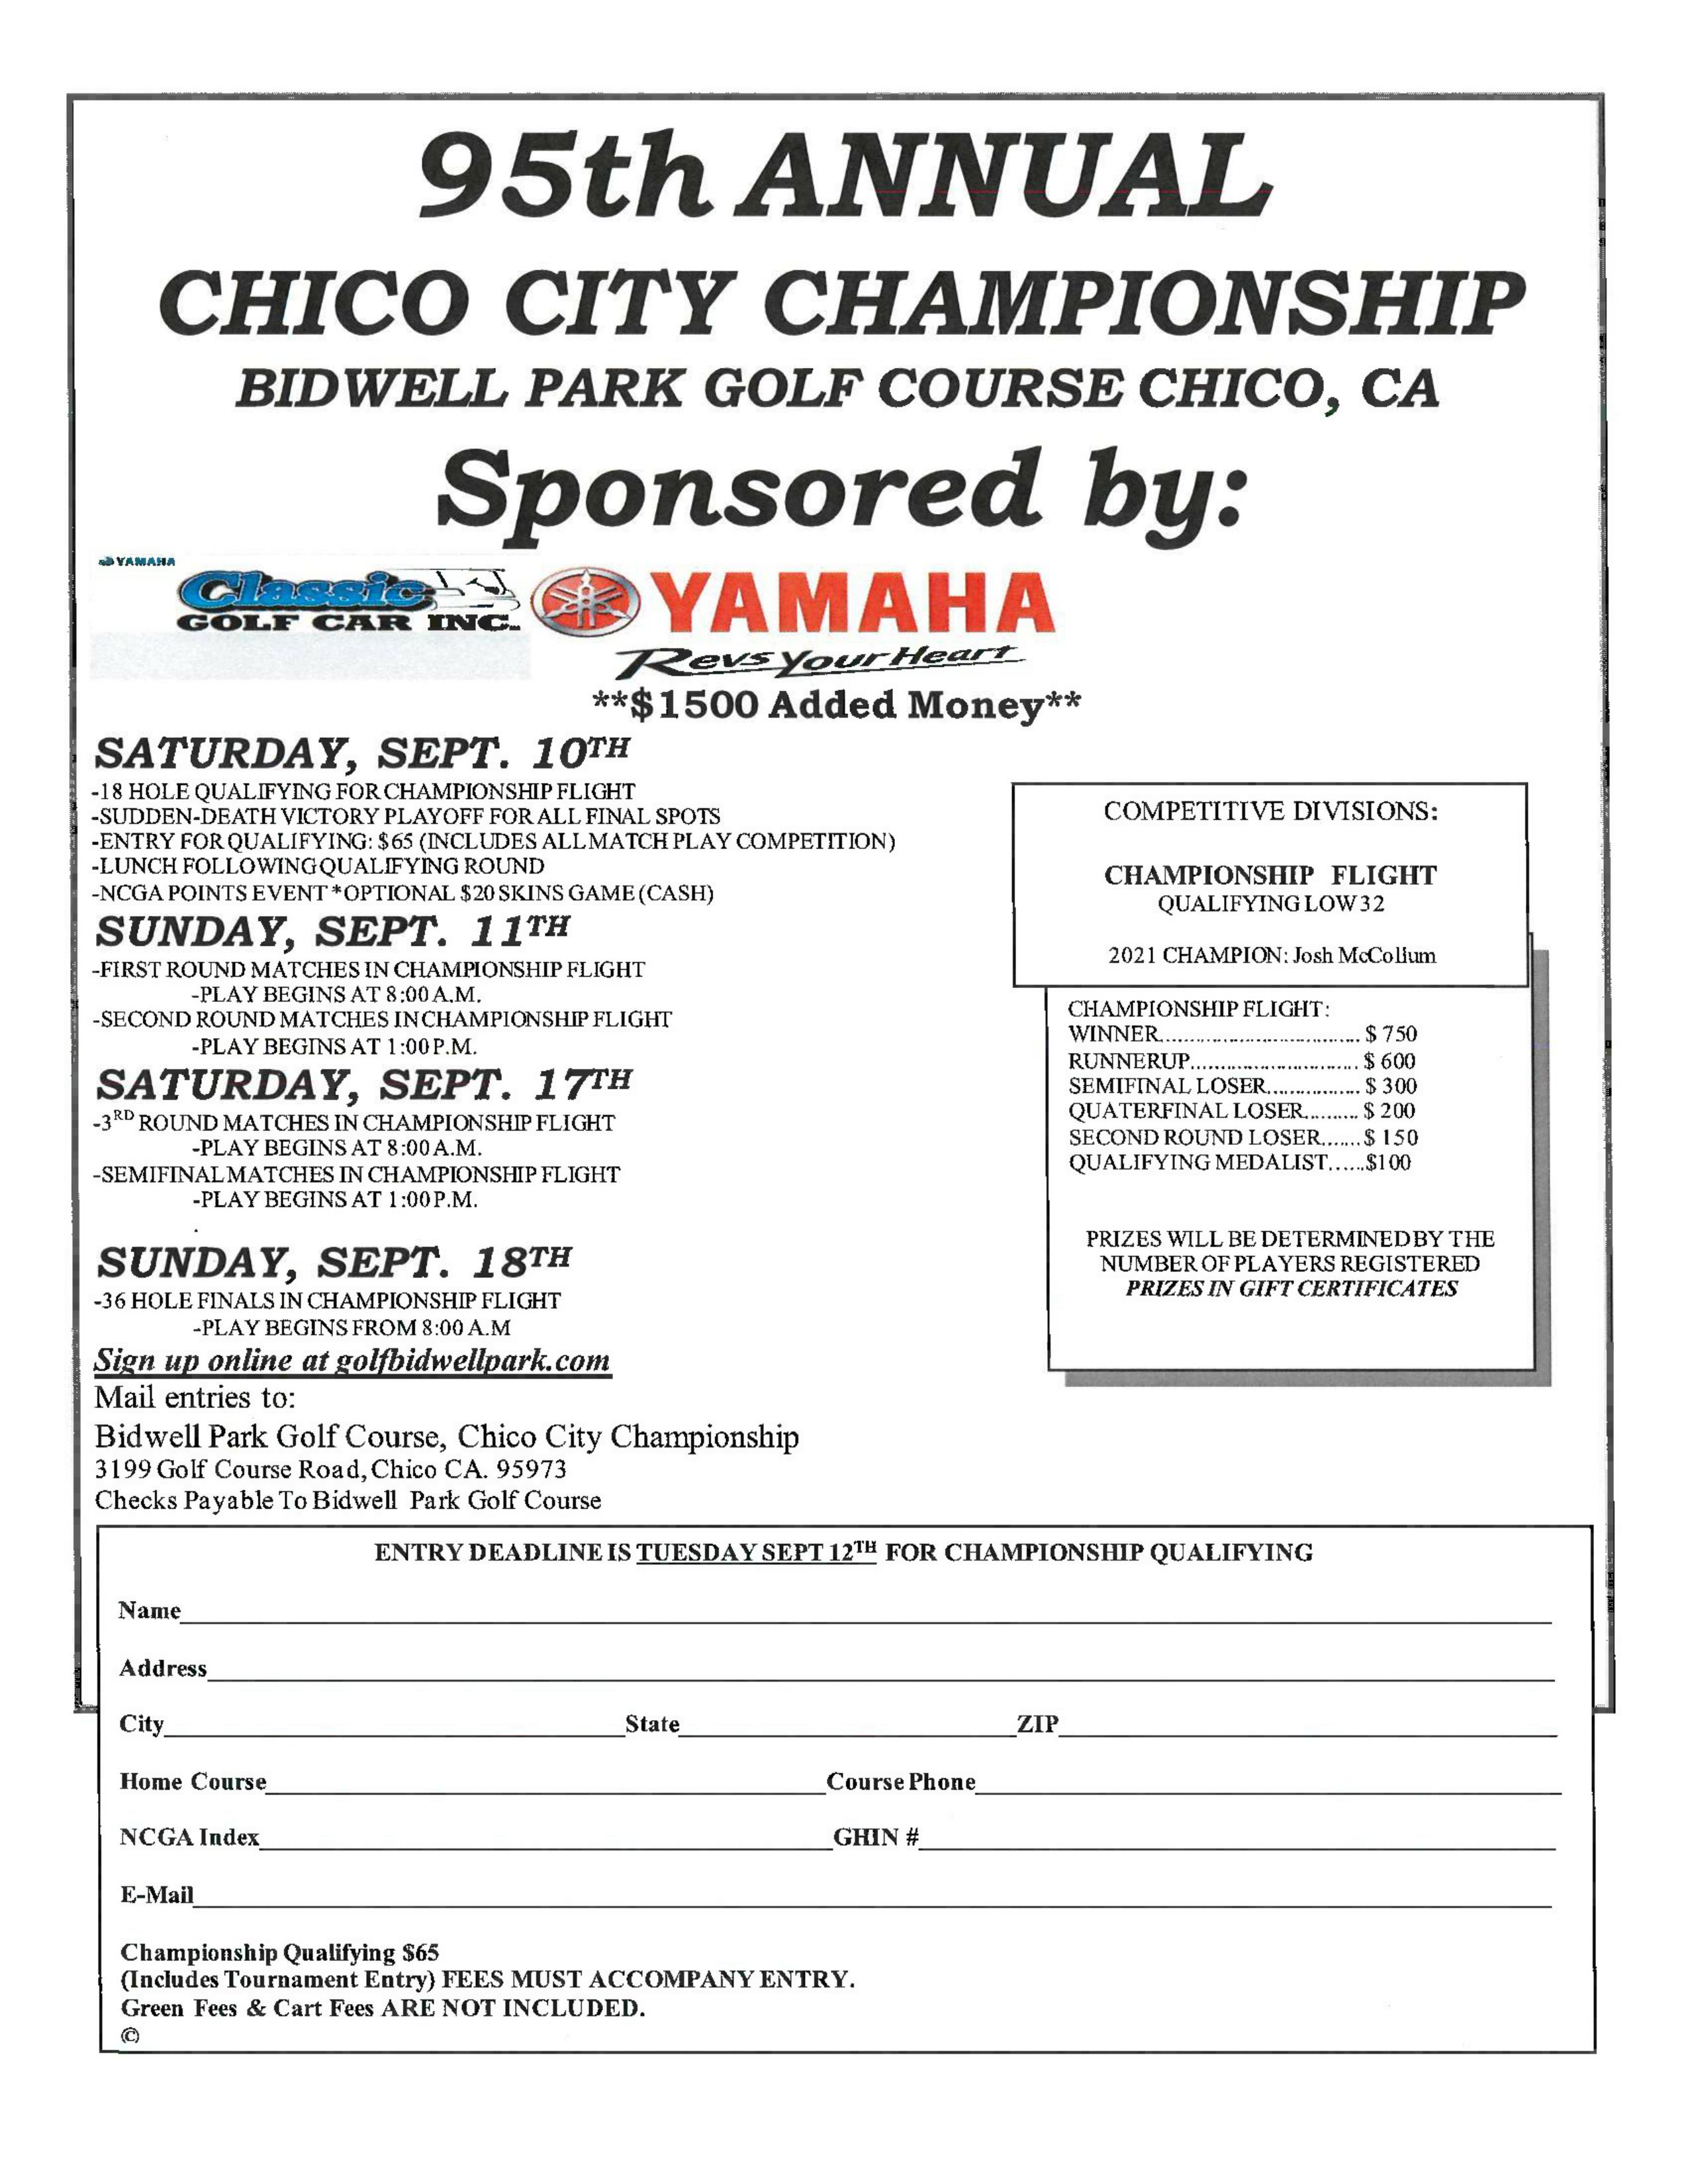 95th Chico City Championship